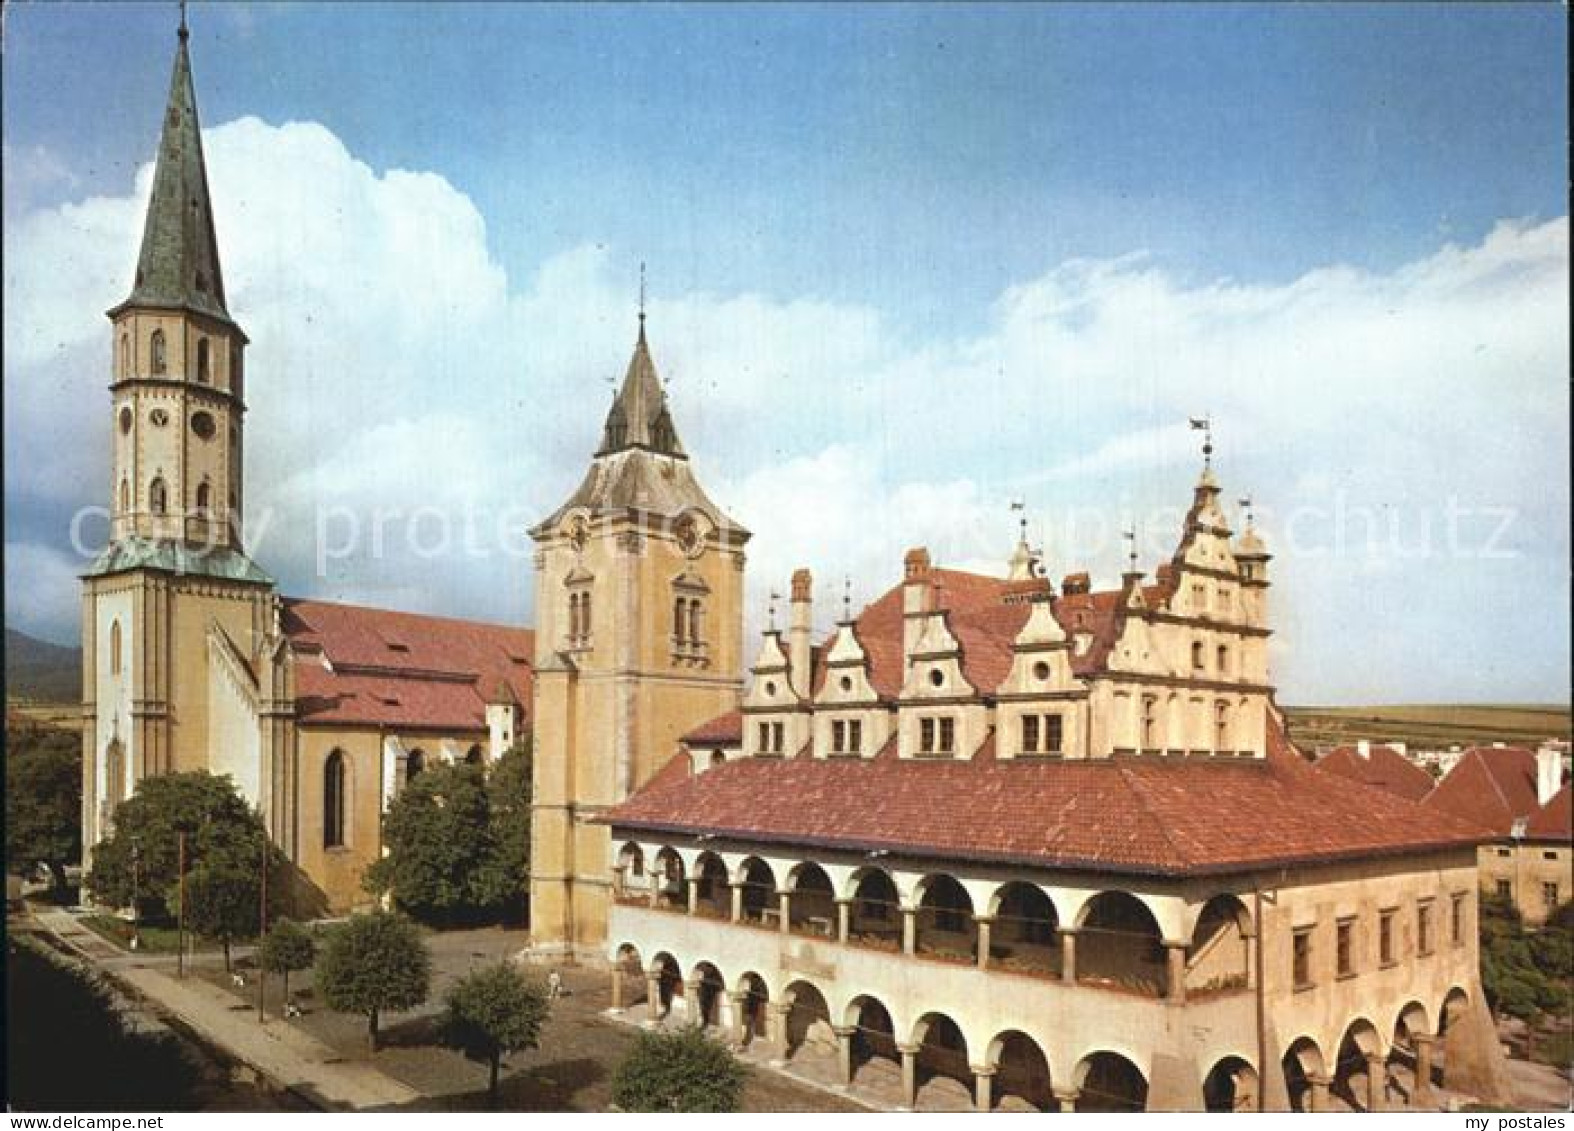 72497256 Levoca Slovakia Rathaus Kirche Heiliger Jakob  - Slovaquie